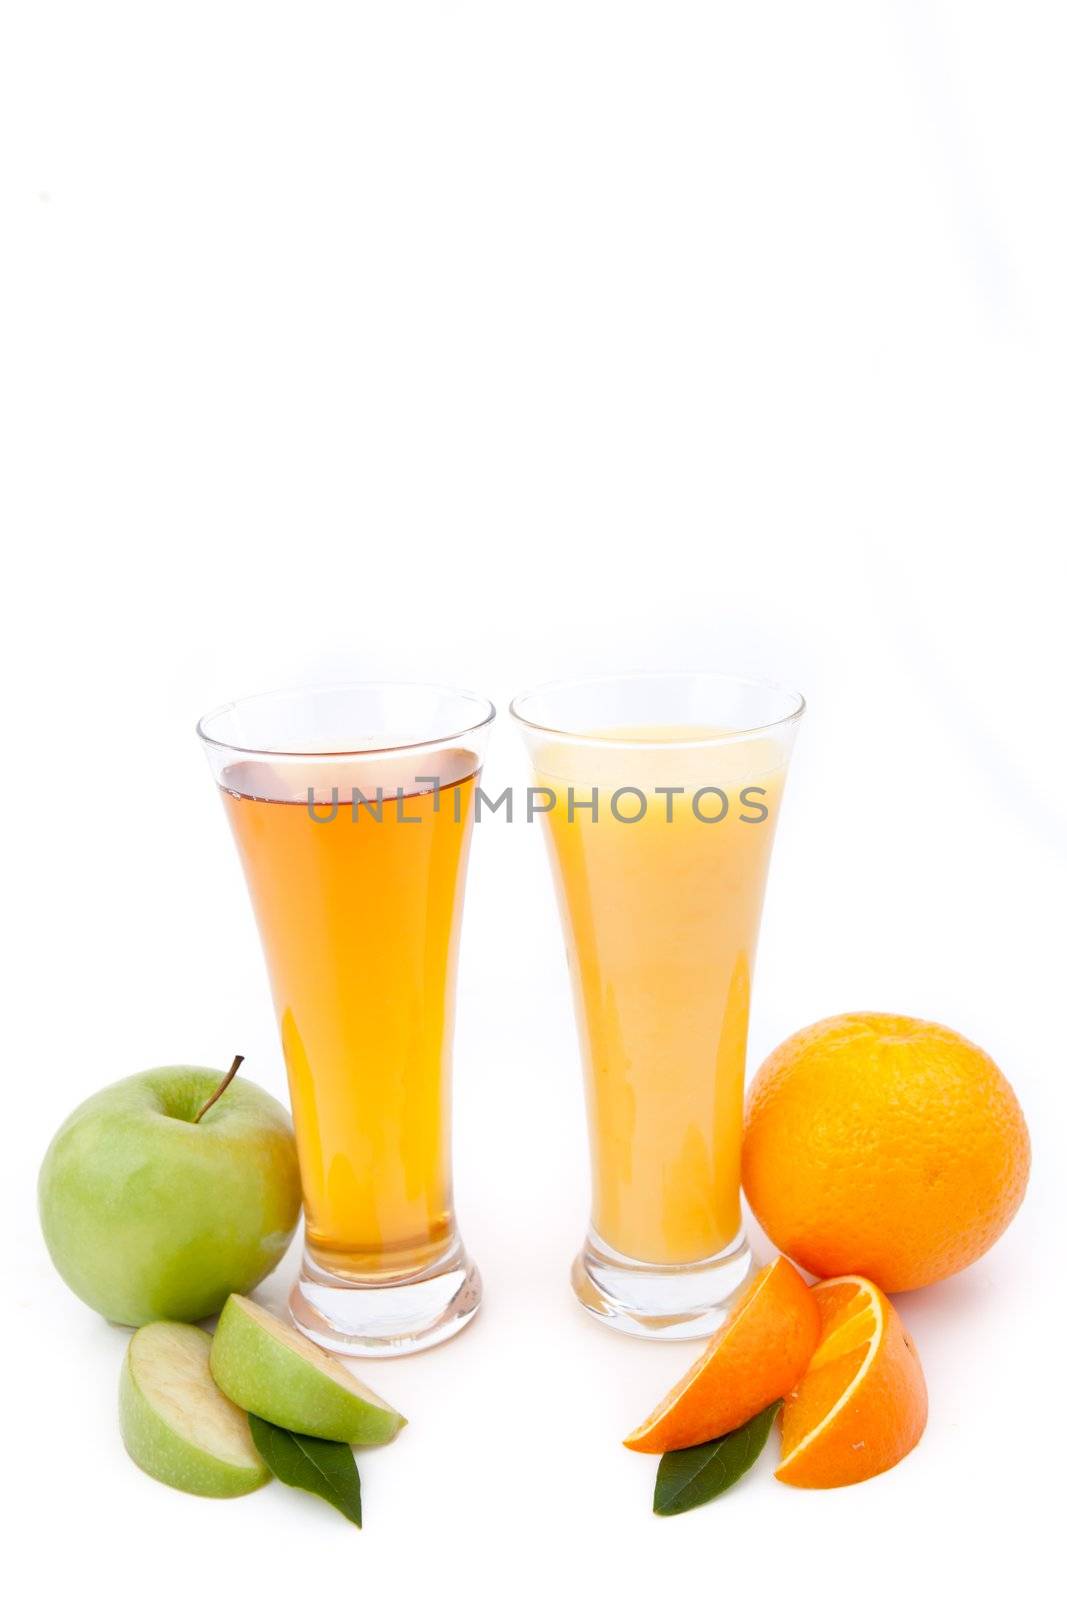 Apple juice and orange juice by Wavebreakmedia